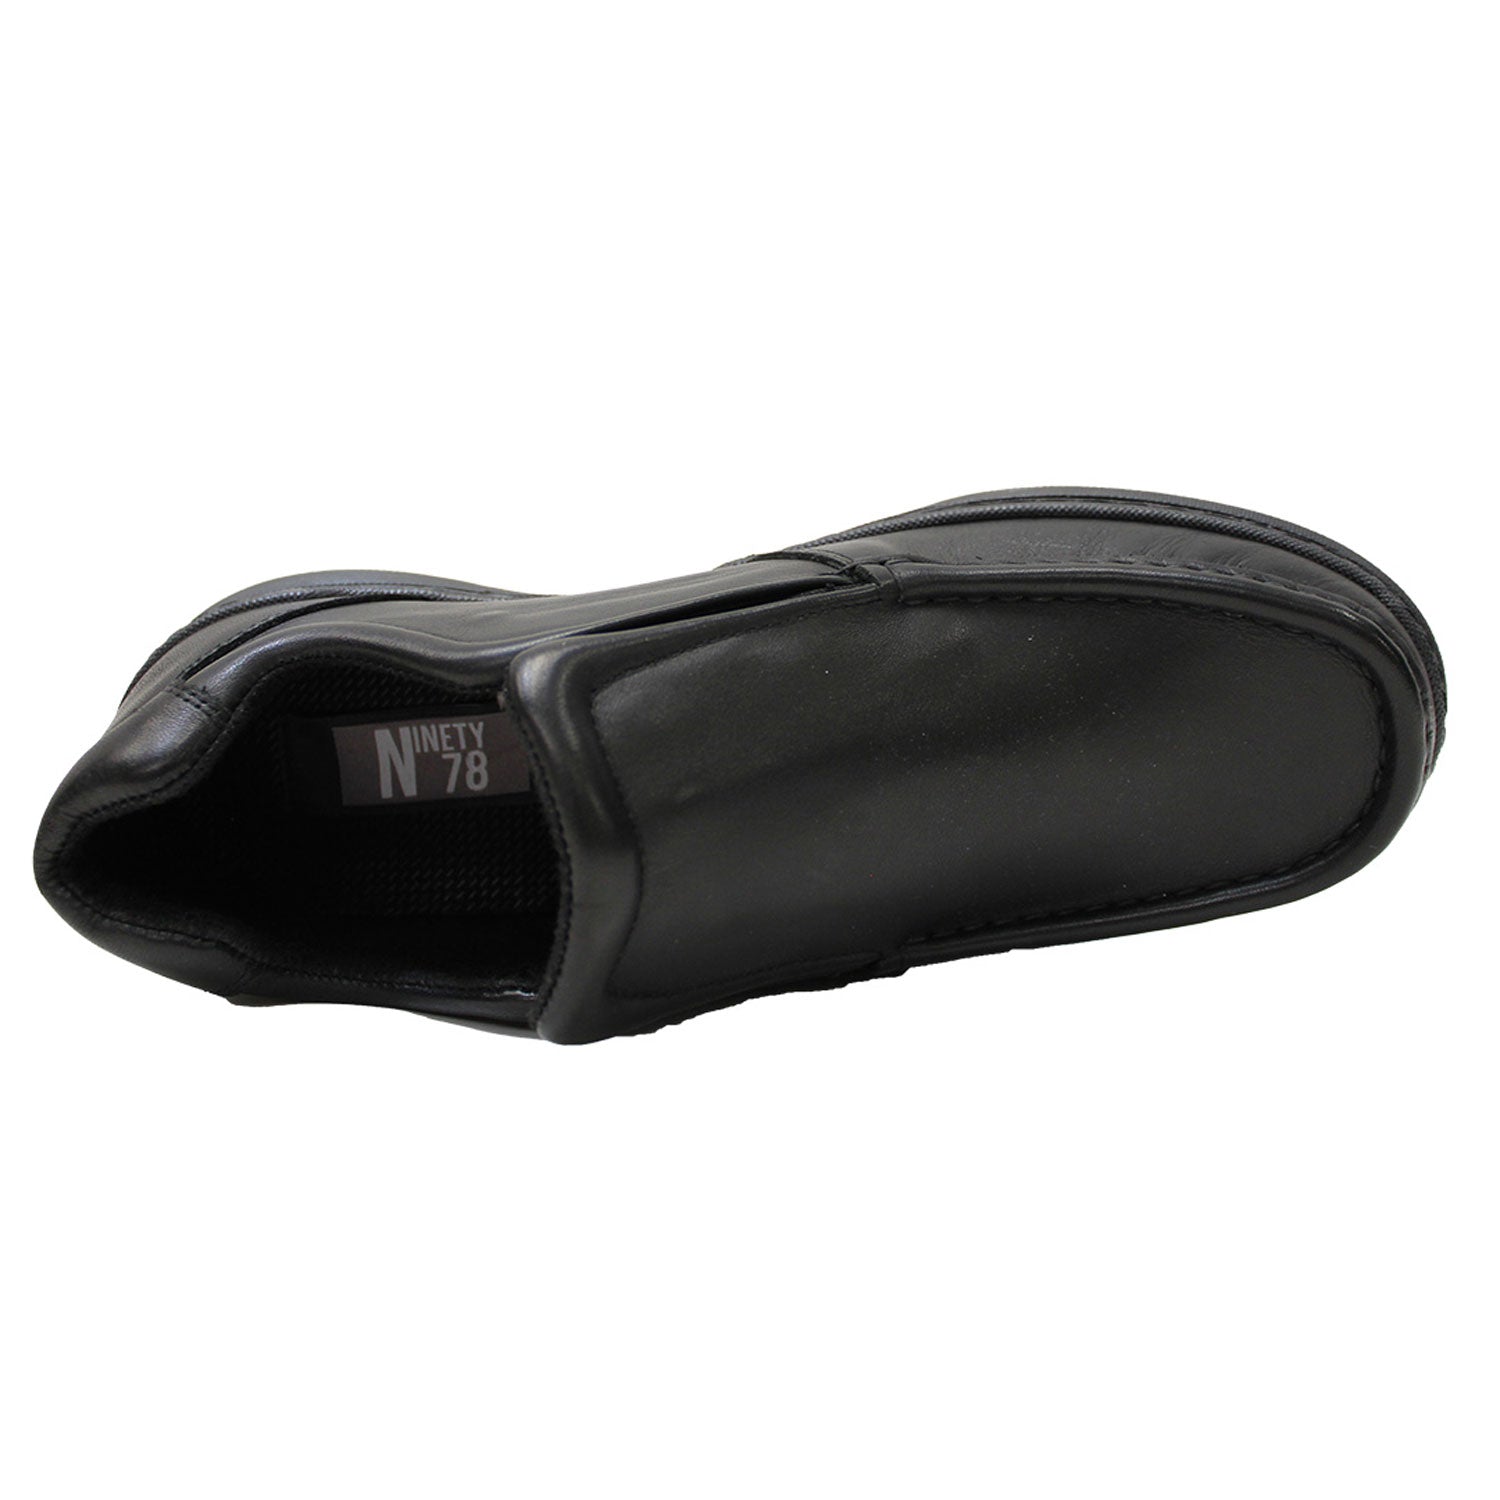 Ninety 78 Slip-on School Shoe - Black 3 Shaws Department Stores